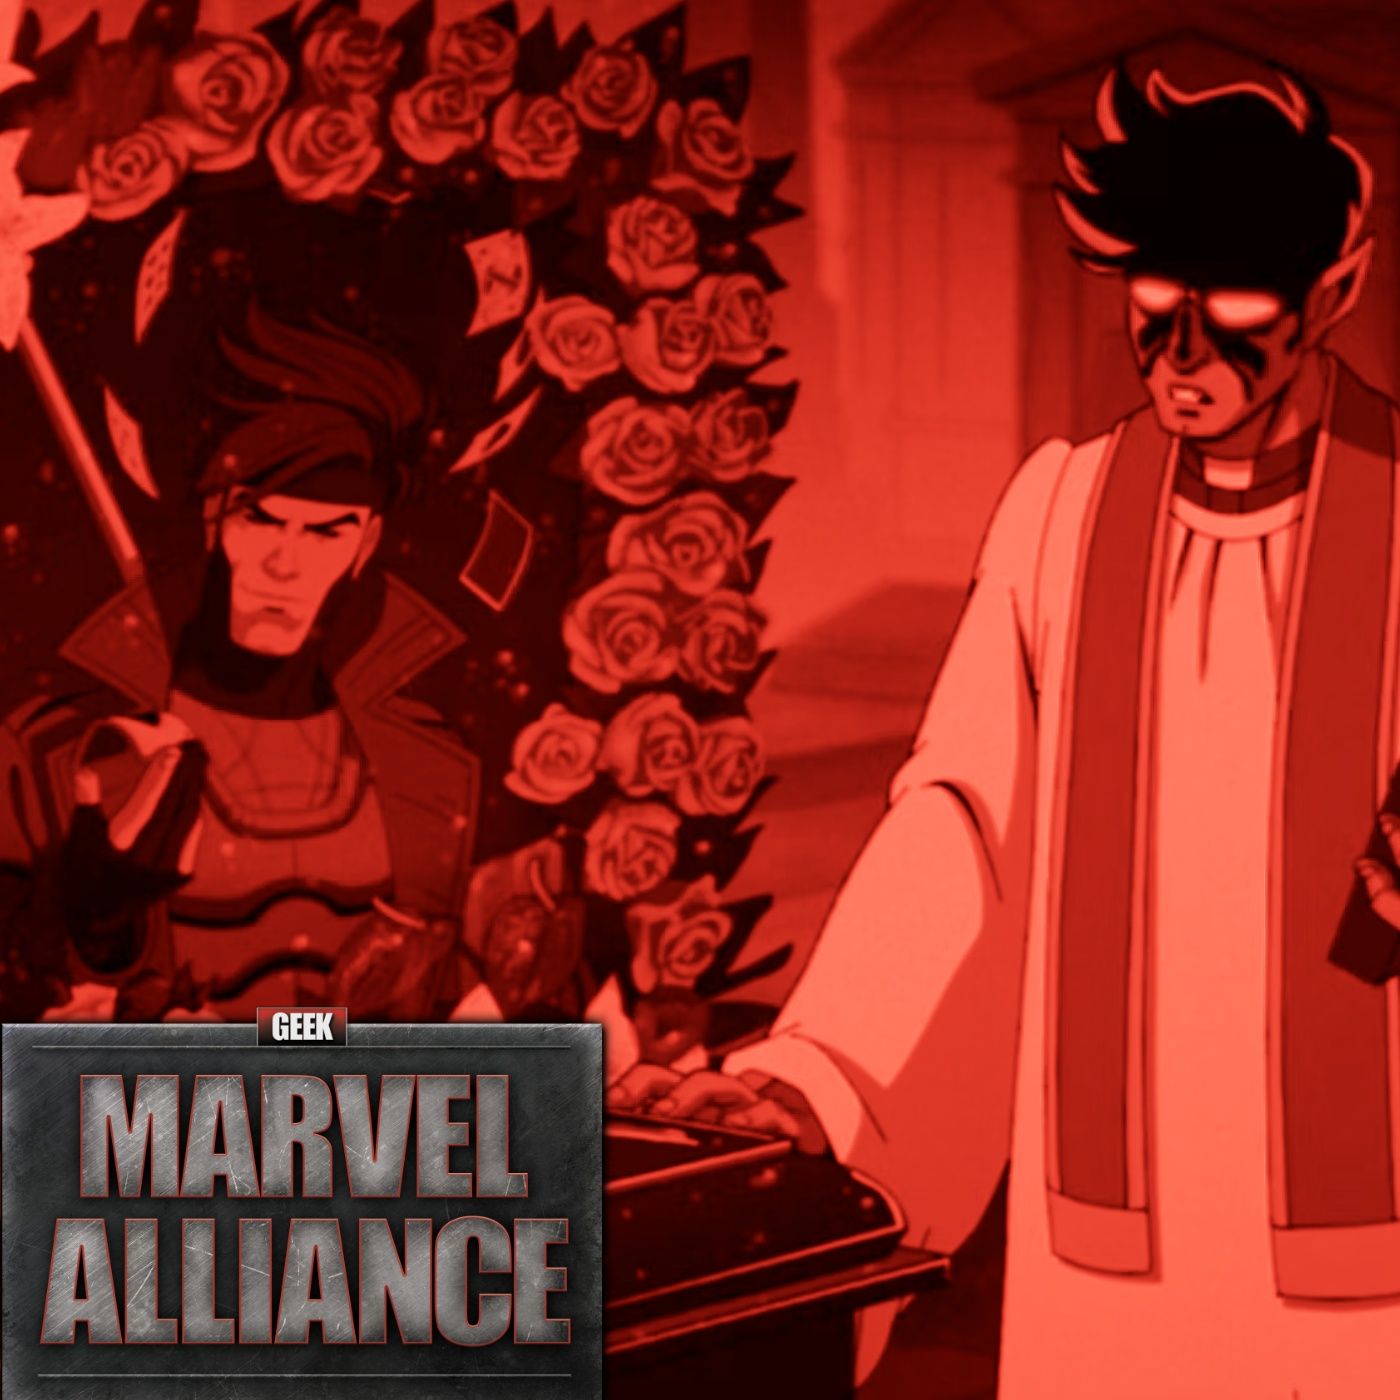 X-Men 97 Episode 7 & Deadpool/Wolverine Trailer 2 : Marvel Alliance Vol. 212